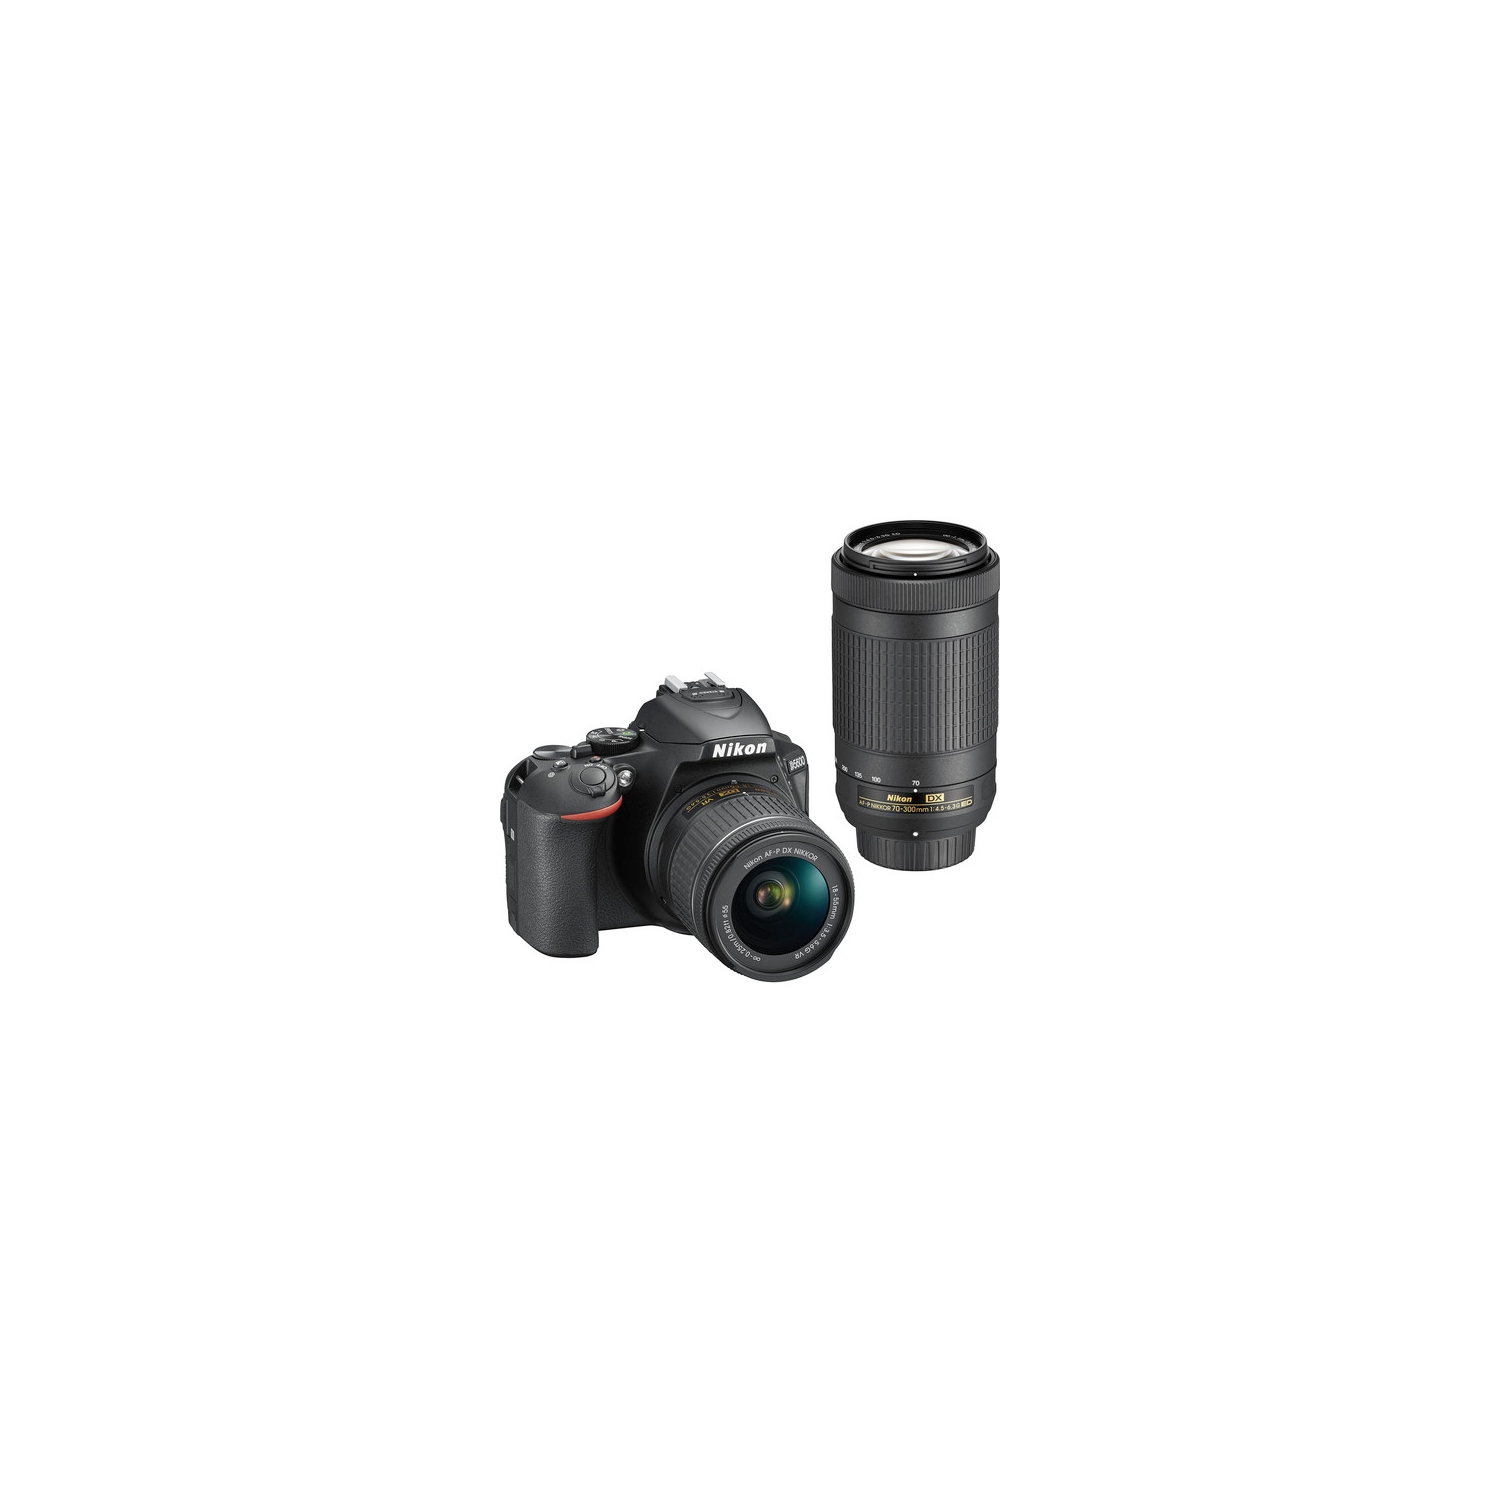 Nikon D5600 DSLR Camera with 18-55mm and 70-300mm Lenses - US Version w/ Seller Warranty